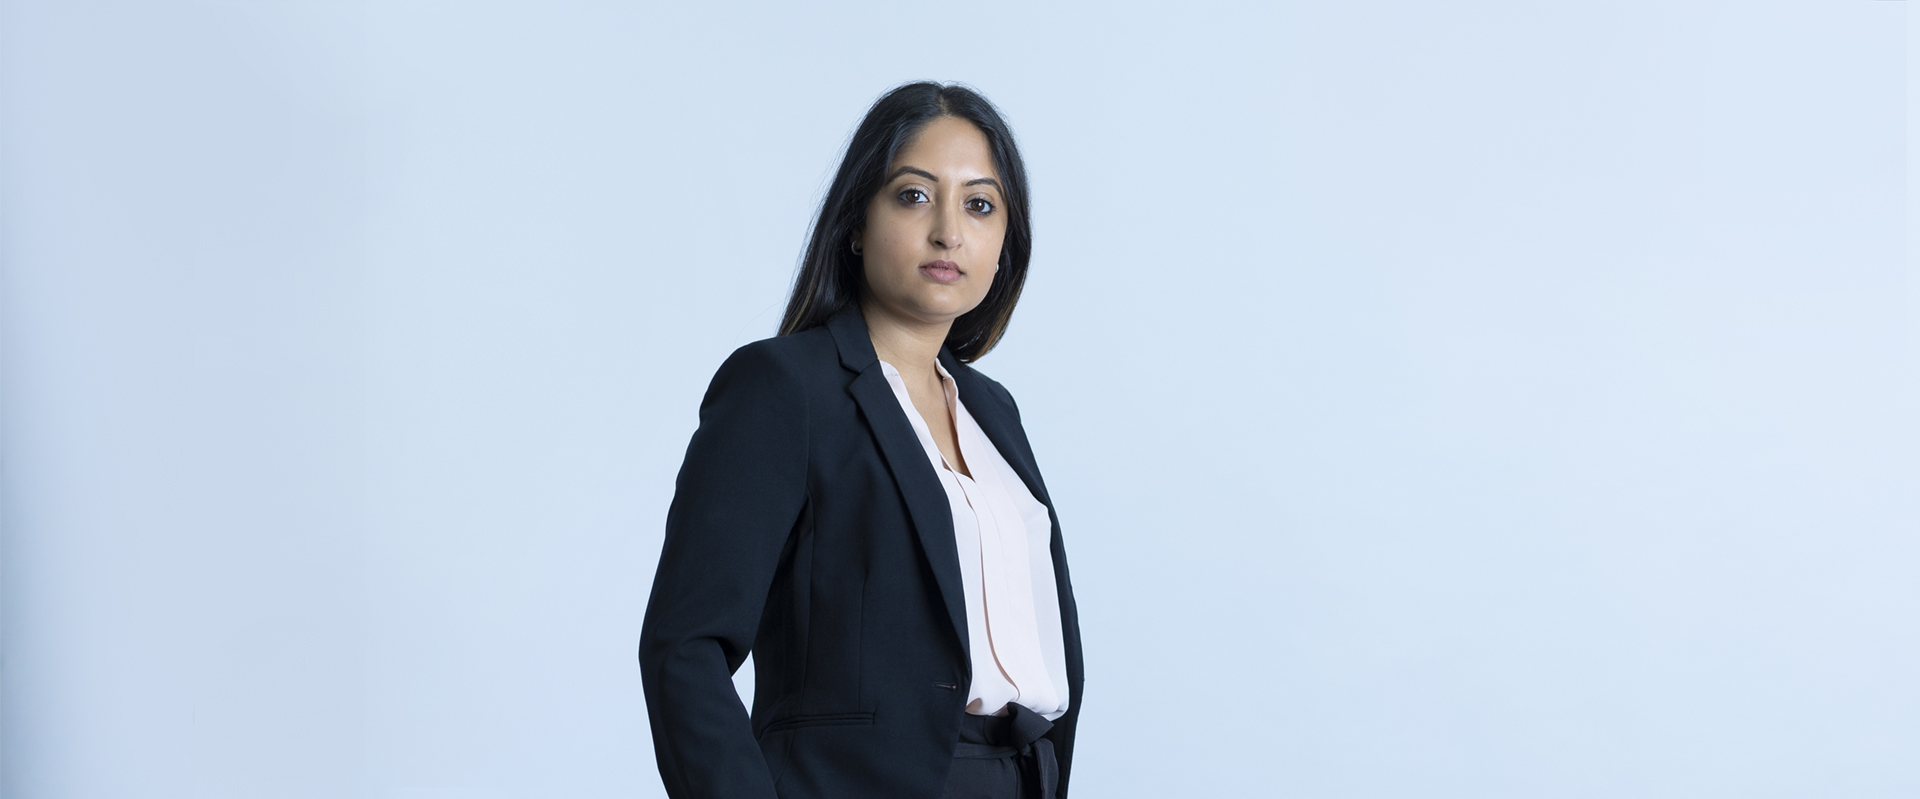 Sunira Patel - Solicitor in Property Litigation